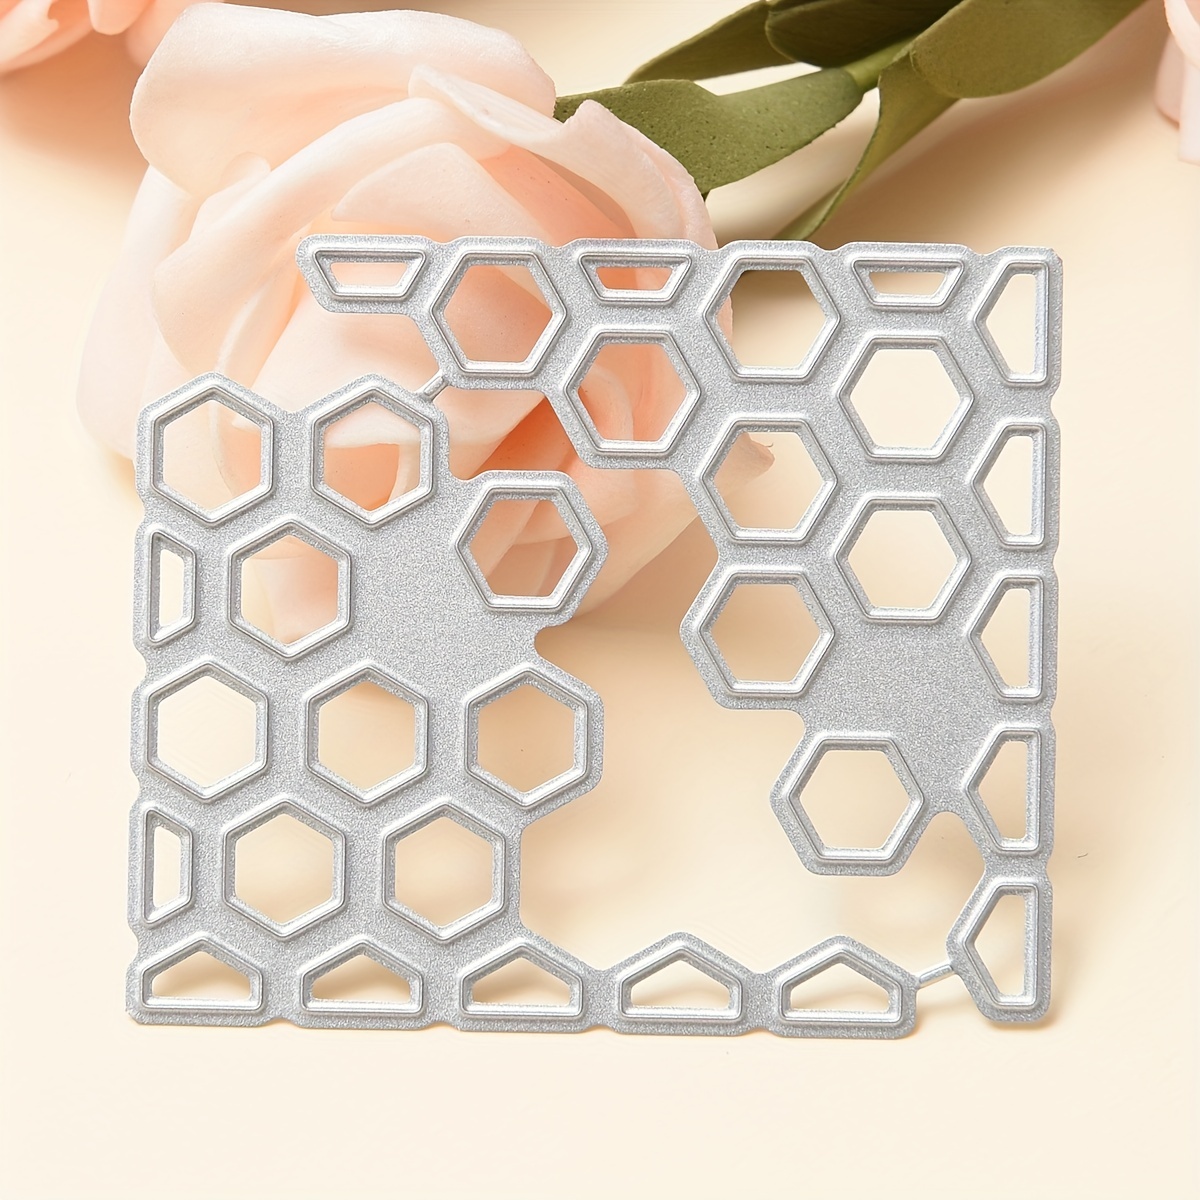 new honeycomb pattern metal cutting die mold scrapbooking decorative embossing album decorative card making diy handicrafts